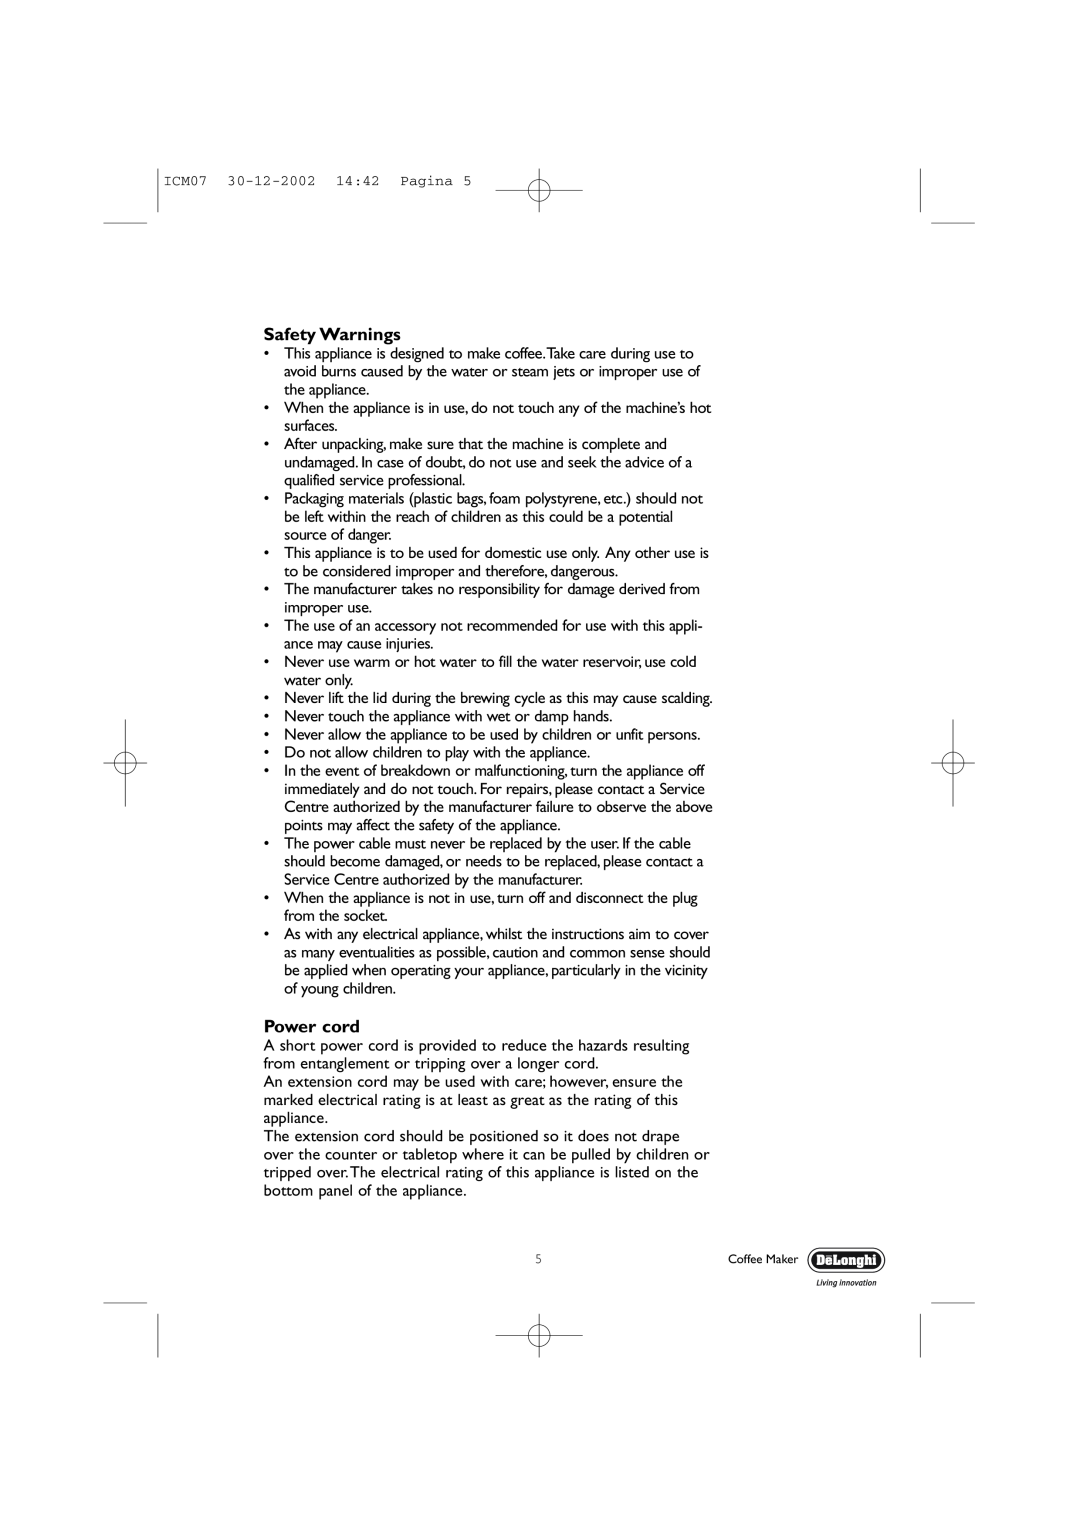 DeLonghi N/A manual Safety Warnings, Power cord 